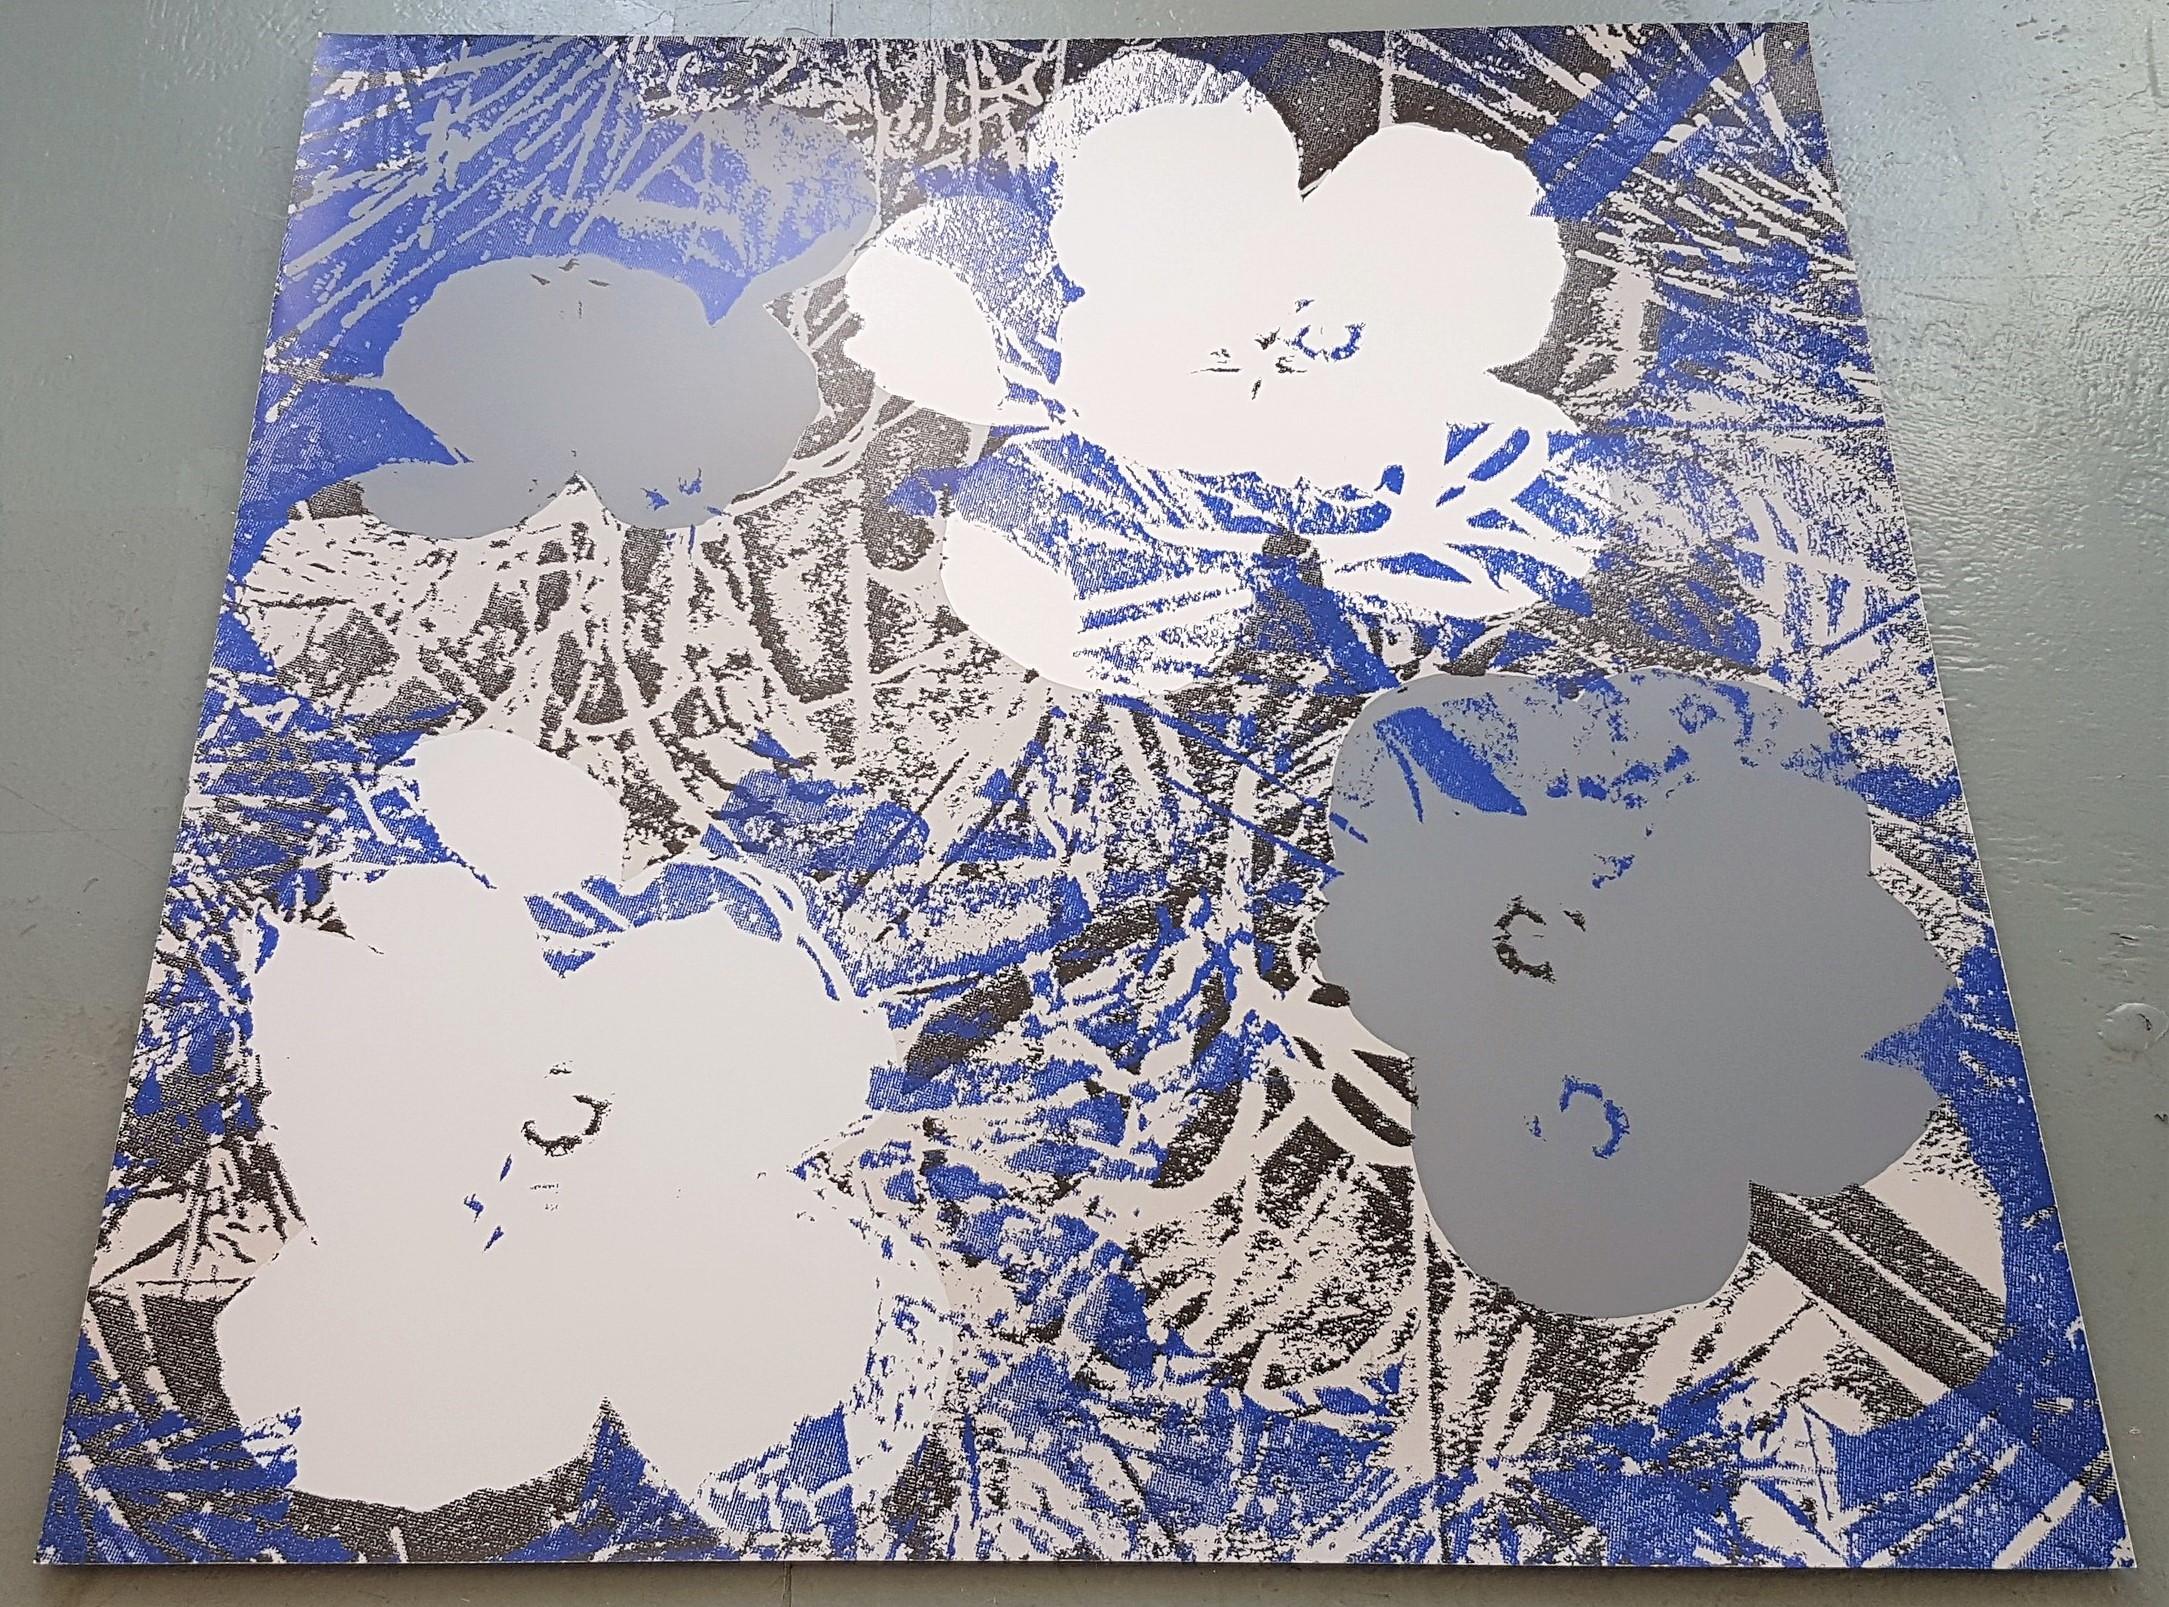 Flowers (Blue, Grey Hues - Pop Art) - Contemporary Print by Jurgen Kuhl 